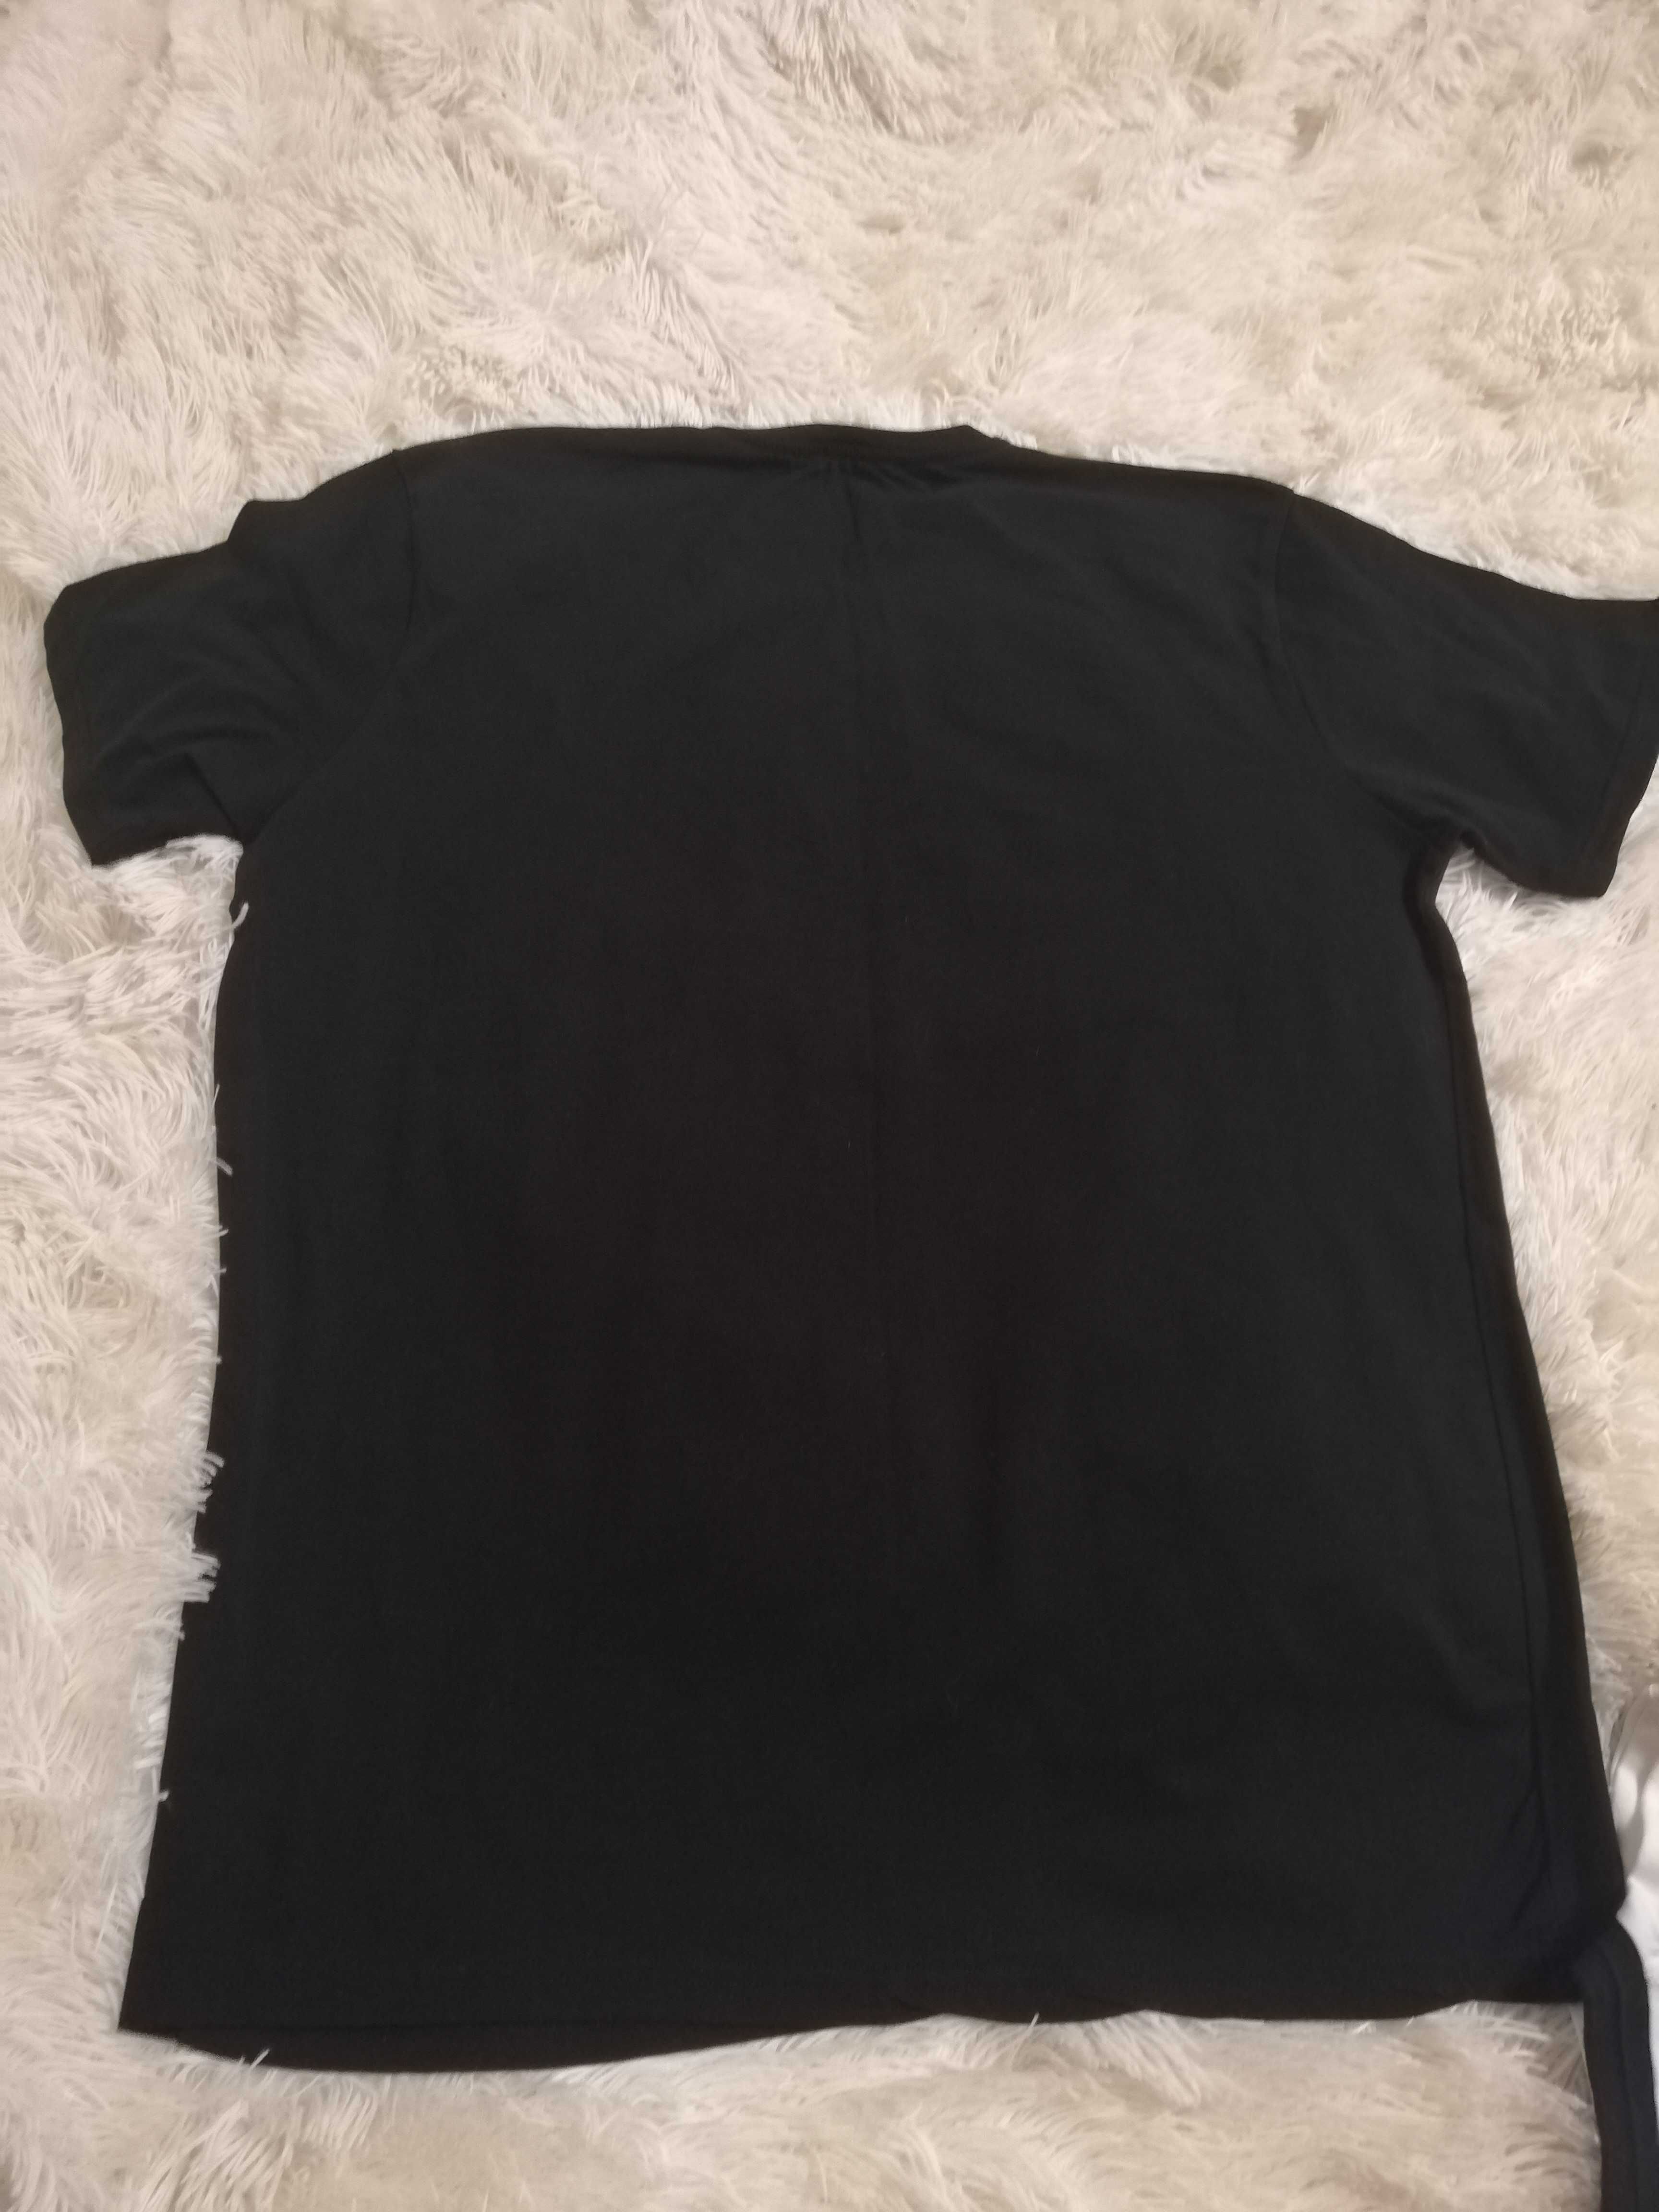 czarny t-shirt EA7 Emporio Armani XL/XXL koszulka czarna Armani L XL